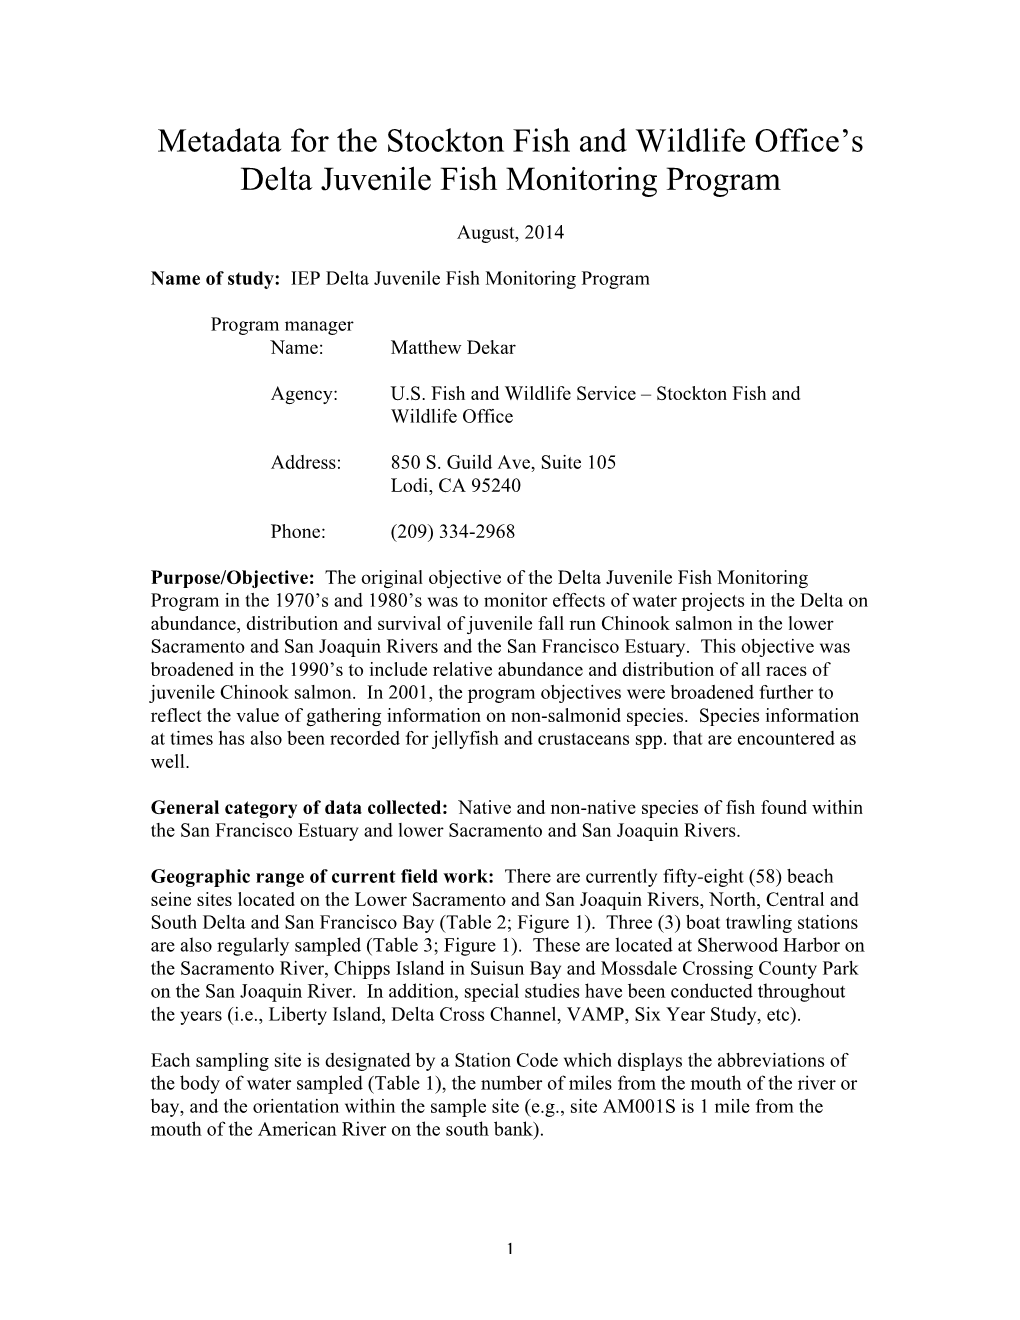 Metadata for the Stockton Fish and Wildlife Office's Delta Juvenile Fish